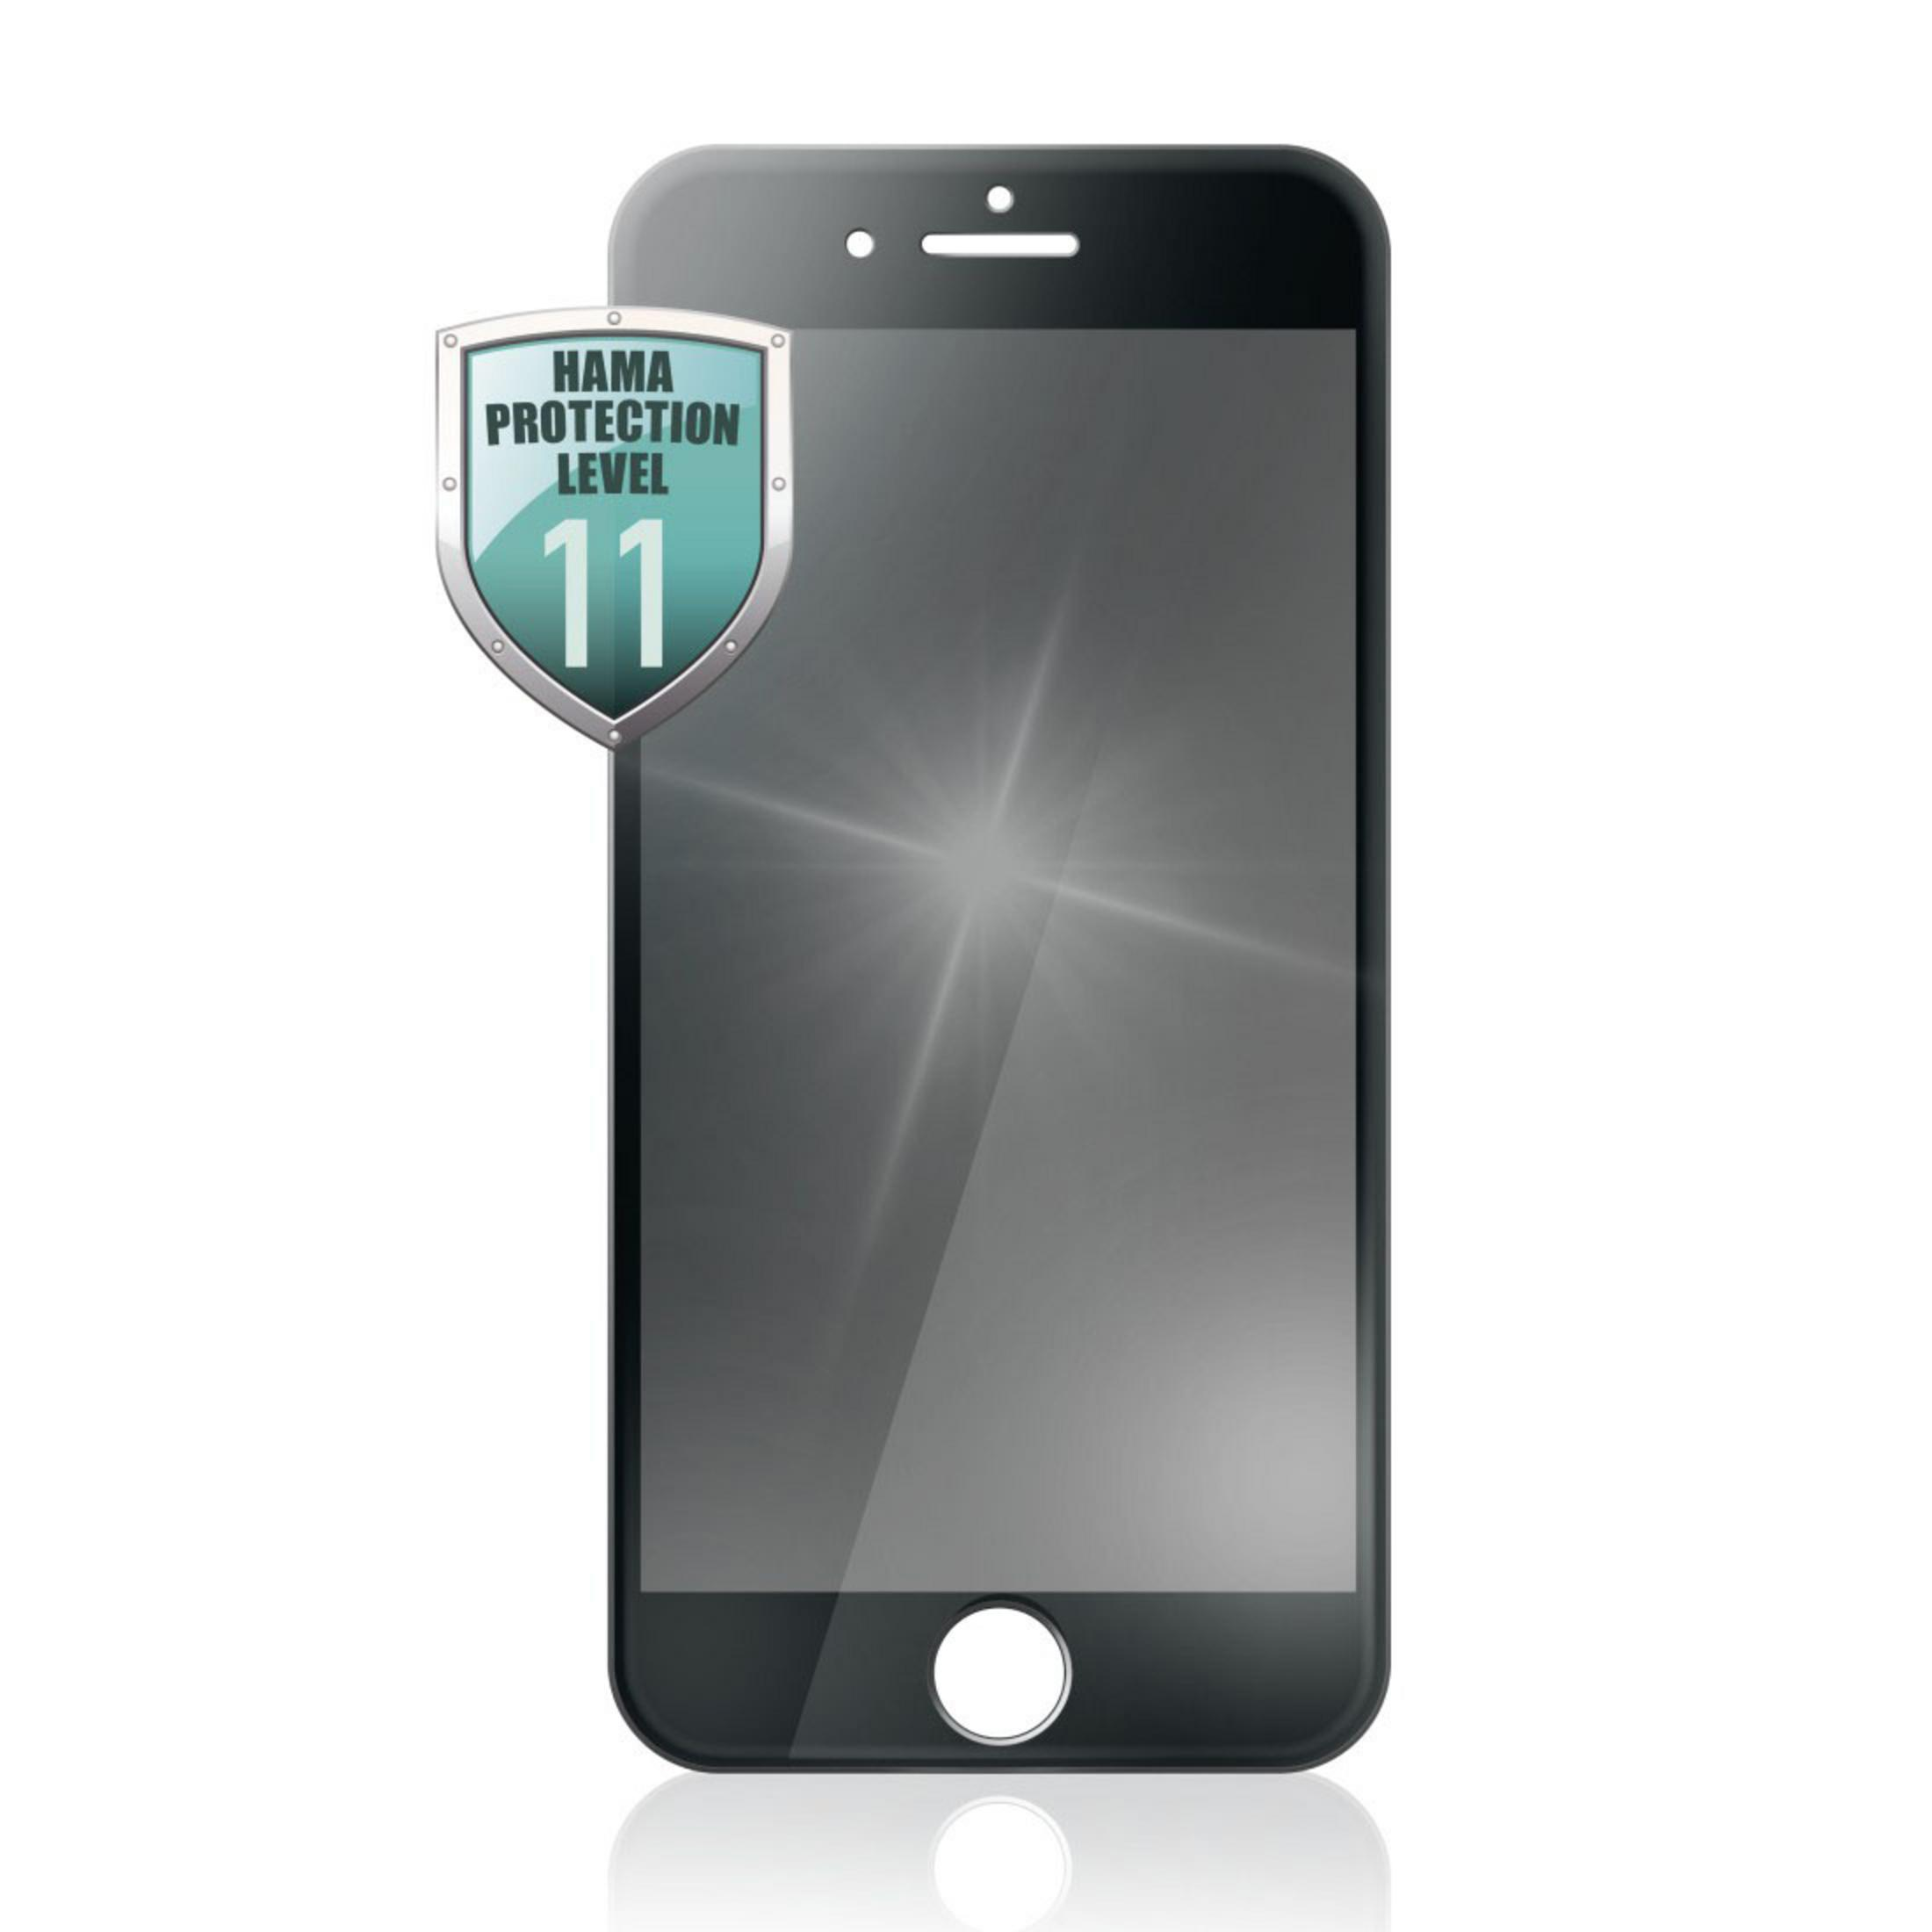 HAMA 186293 GL. 6s, 8, Apple 7, iPhone SE PROT. 6 Displayschutz(für iPhone SCR. iPhone iPhone (2020)) iPhone PRIVACY IPH 6